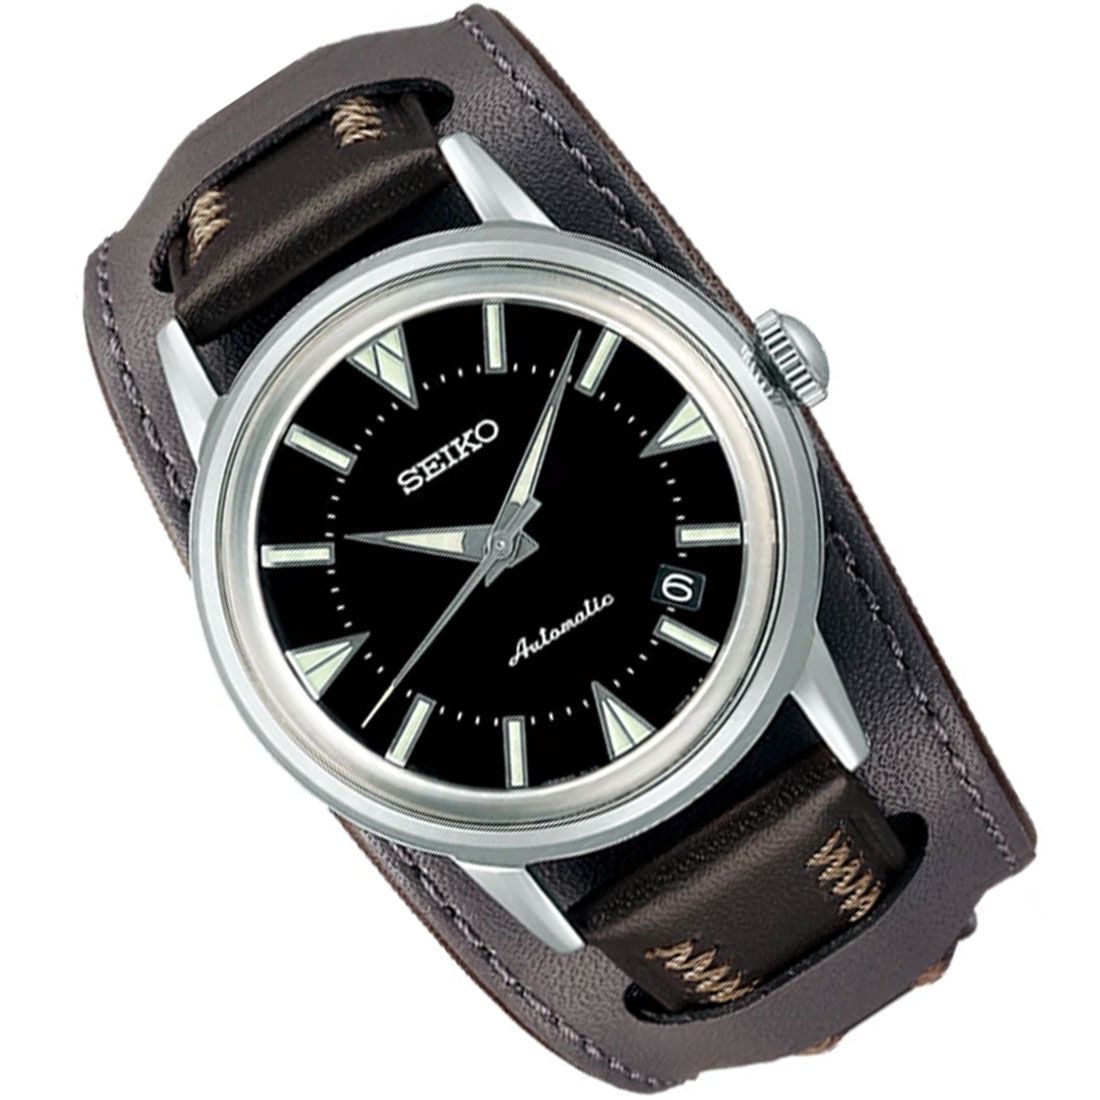 Seiko Prospex First Alpinist Reprint Design JDM Watch SBEN001 